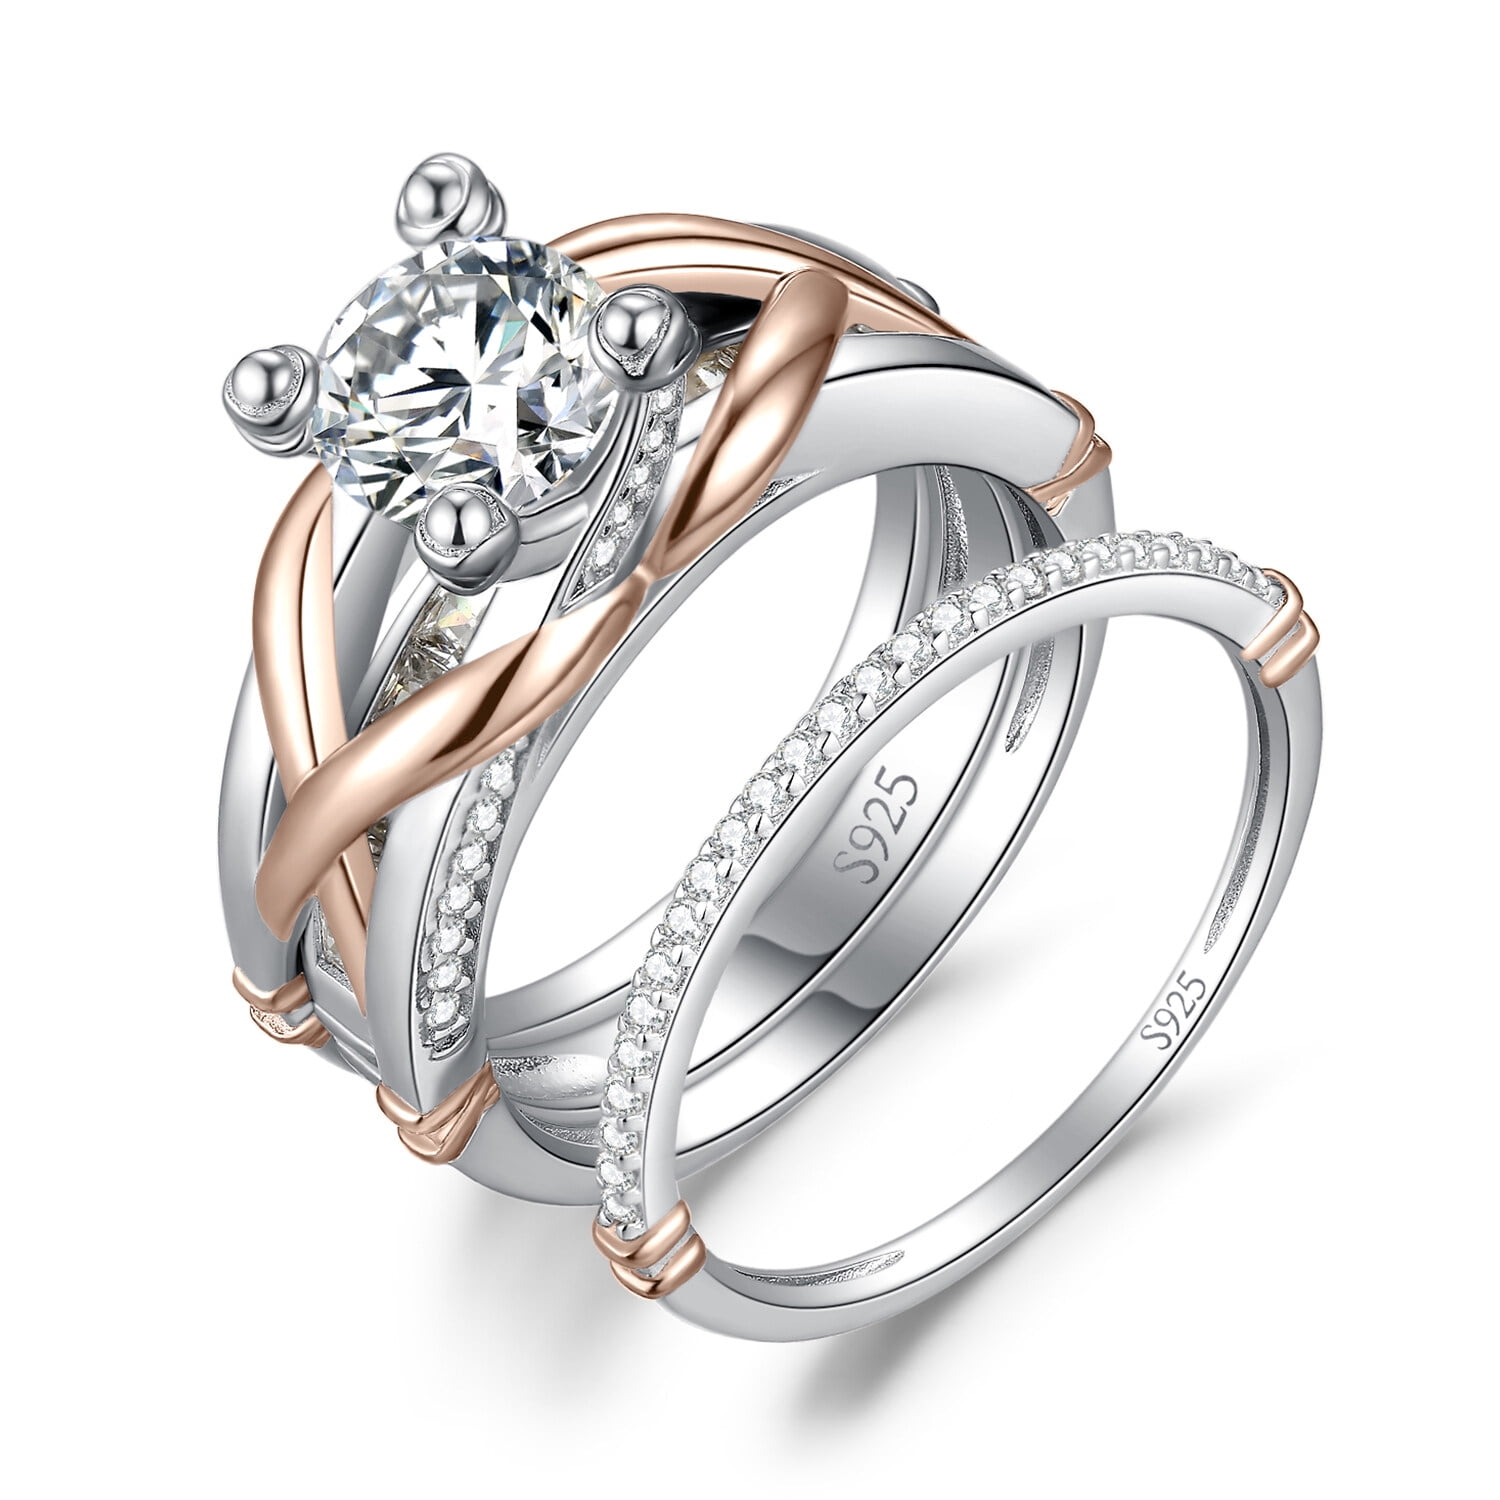 PalmBeach Jewelry Women's Promise Rings in Promise Rings - Walmart.com